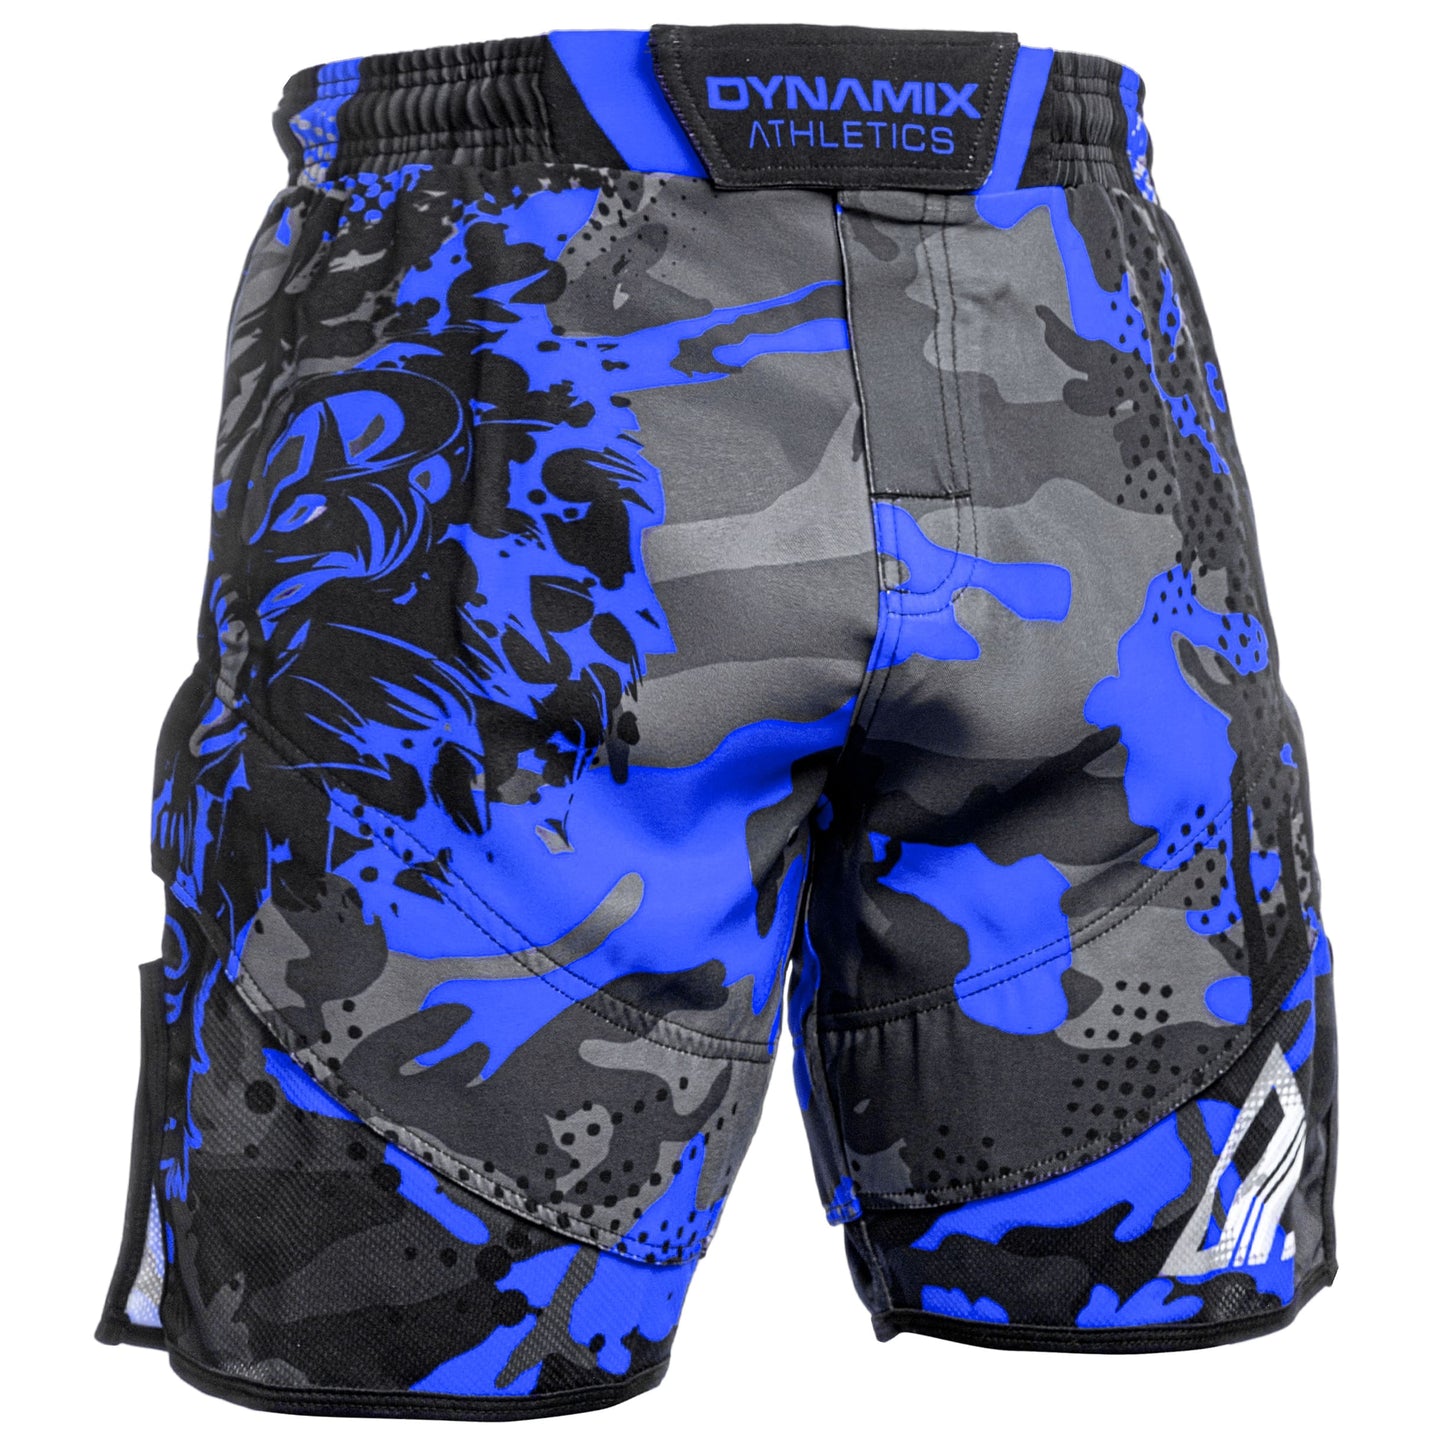 Dynamix Athletics Hybrid Training Shorts Predatex - Blue Camo